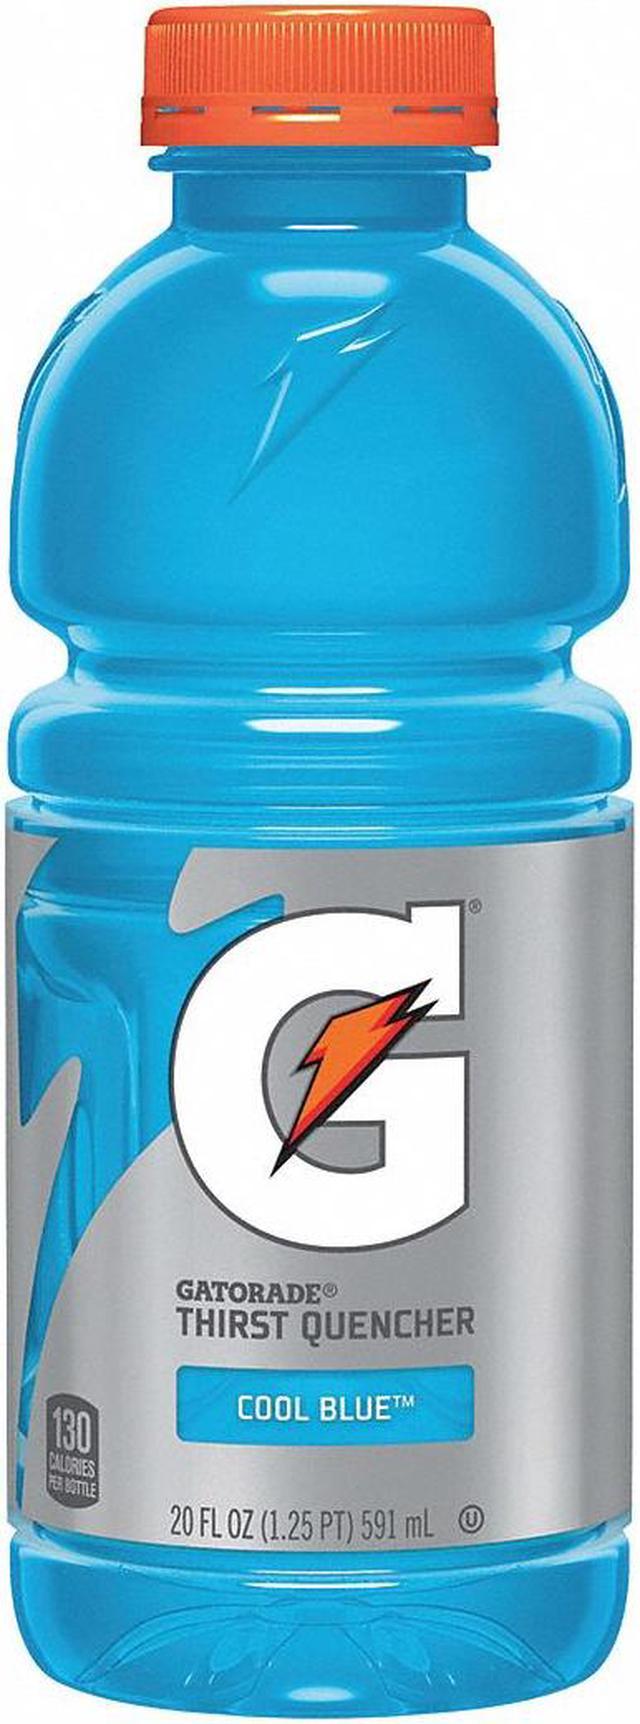 Gatorade Thirst Quencher Cool Blue 20 oz Bottle 24/Carton 24812 